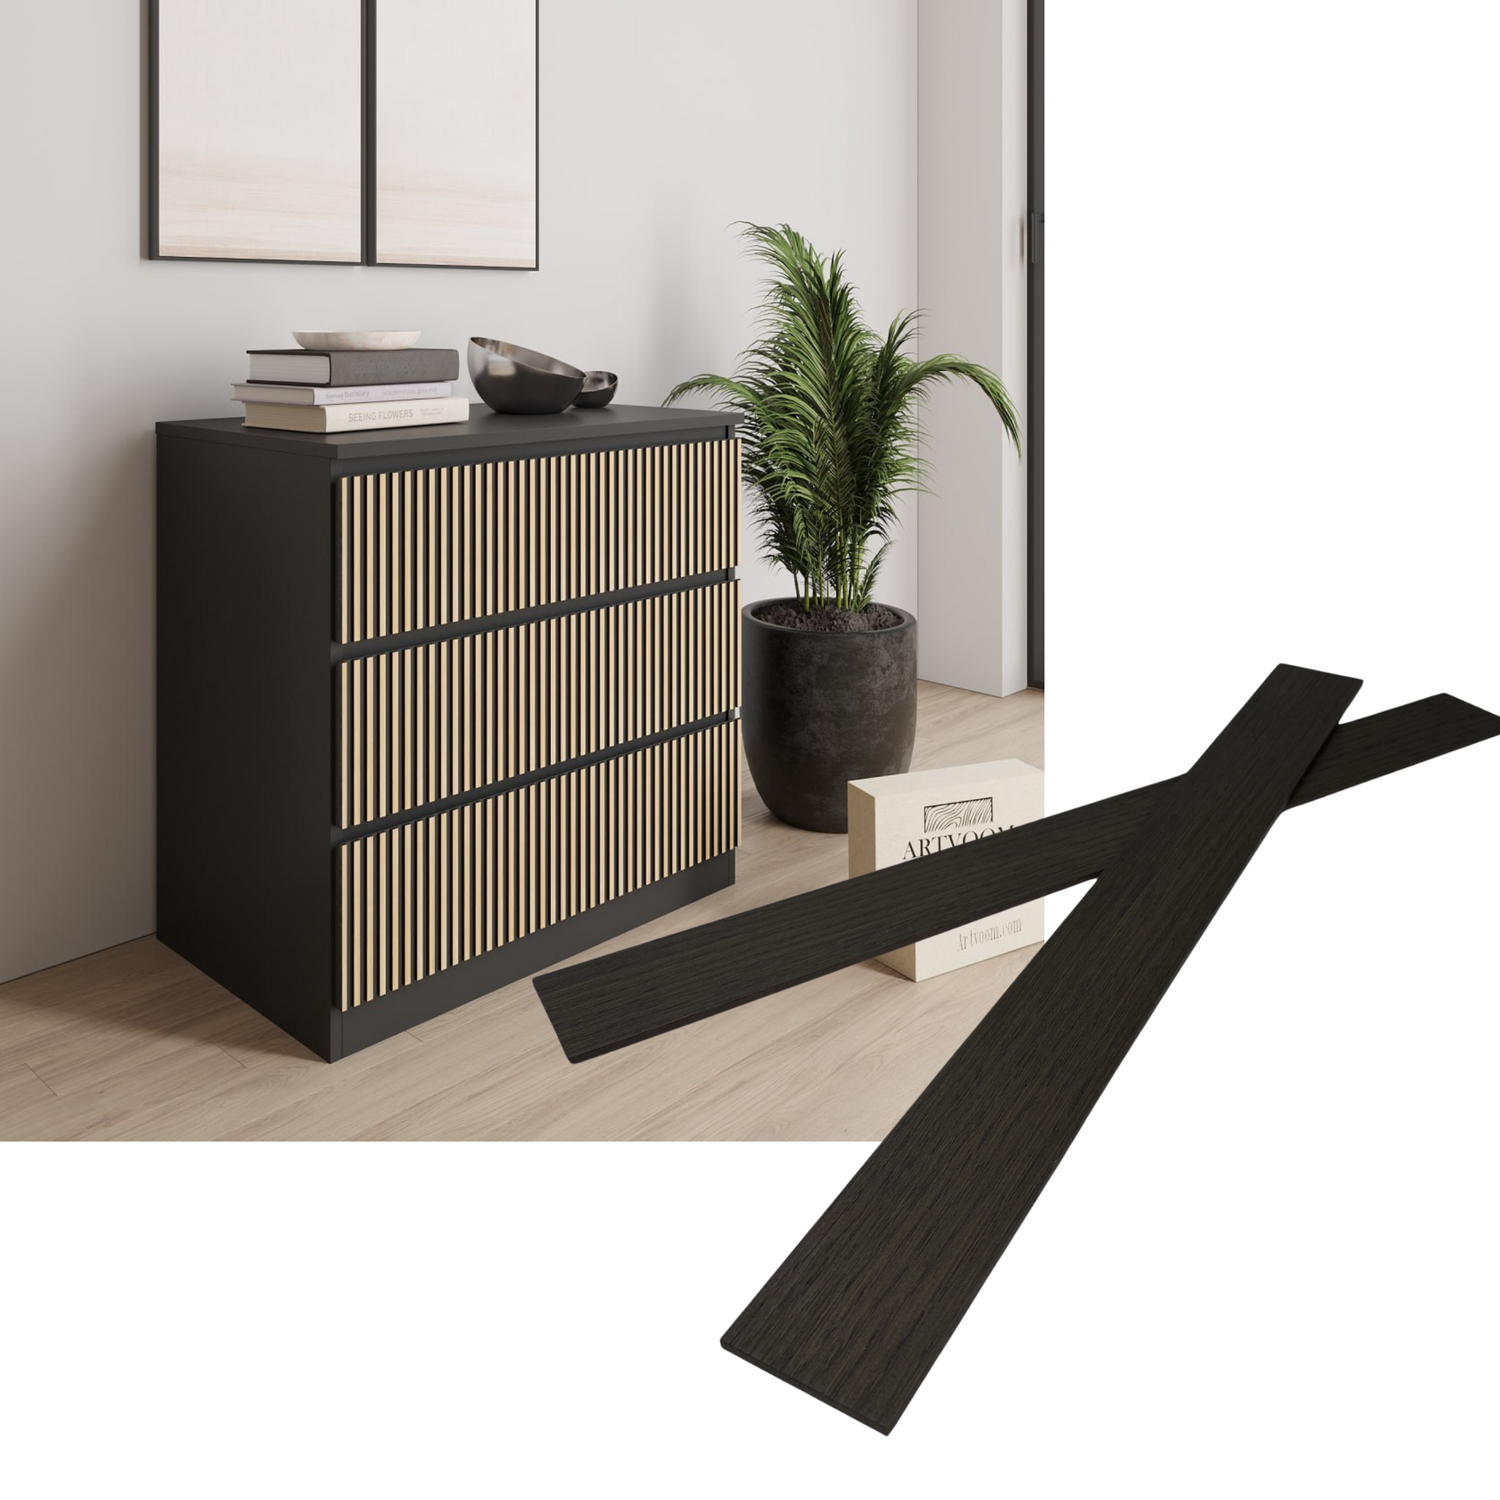 Artvoom overlay wooden slats panels for decorating furniture dressers for IKEA® malm - Artvoom